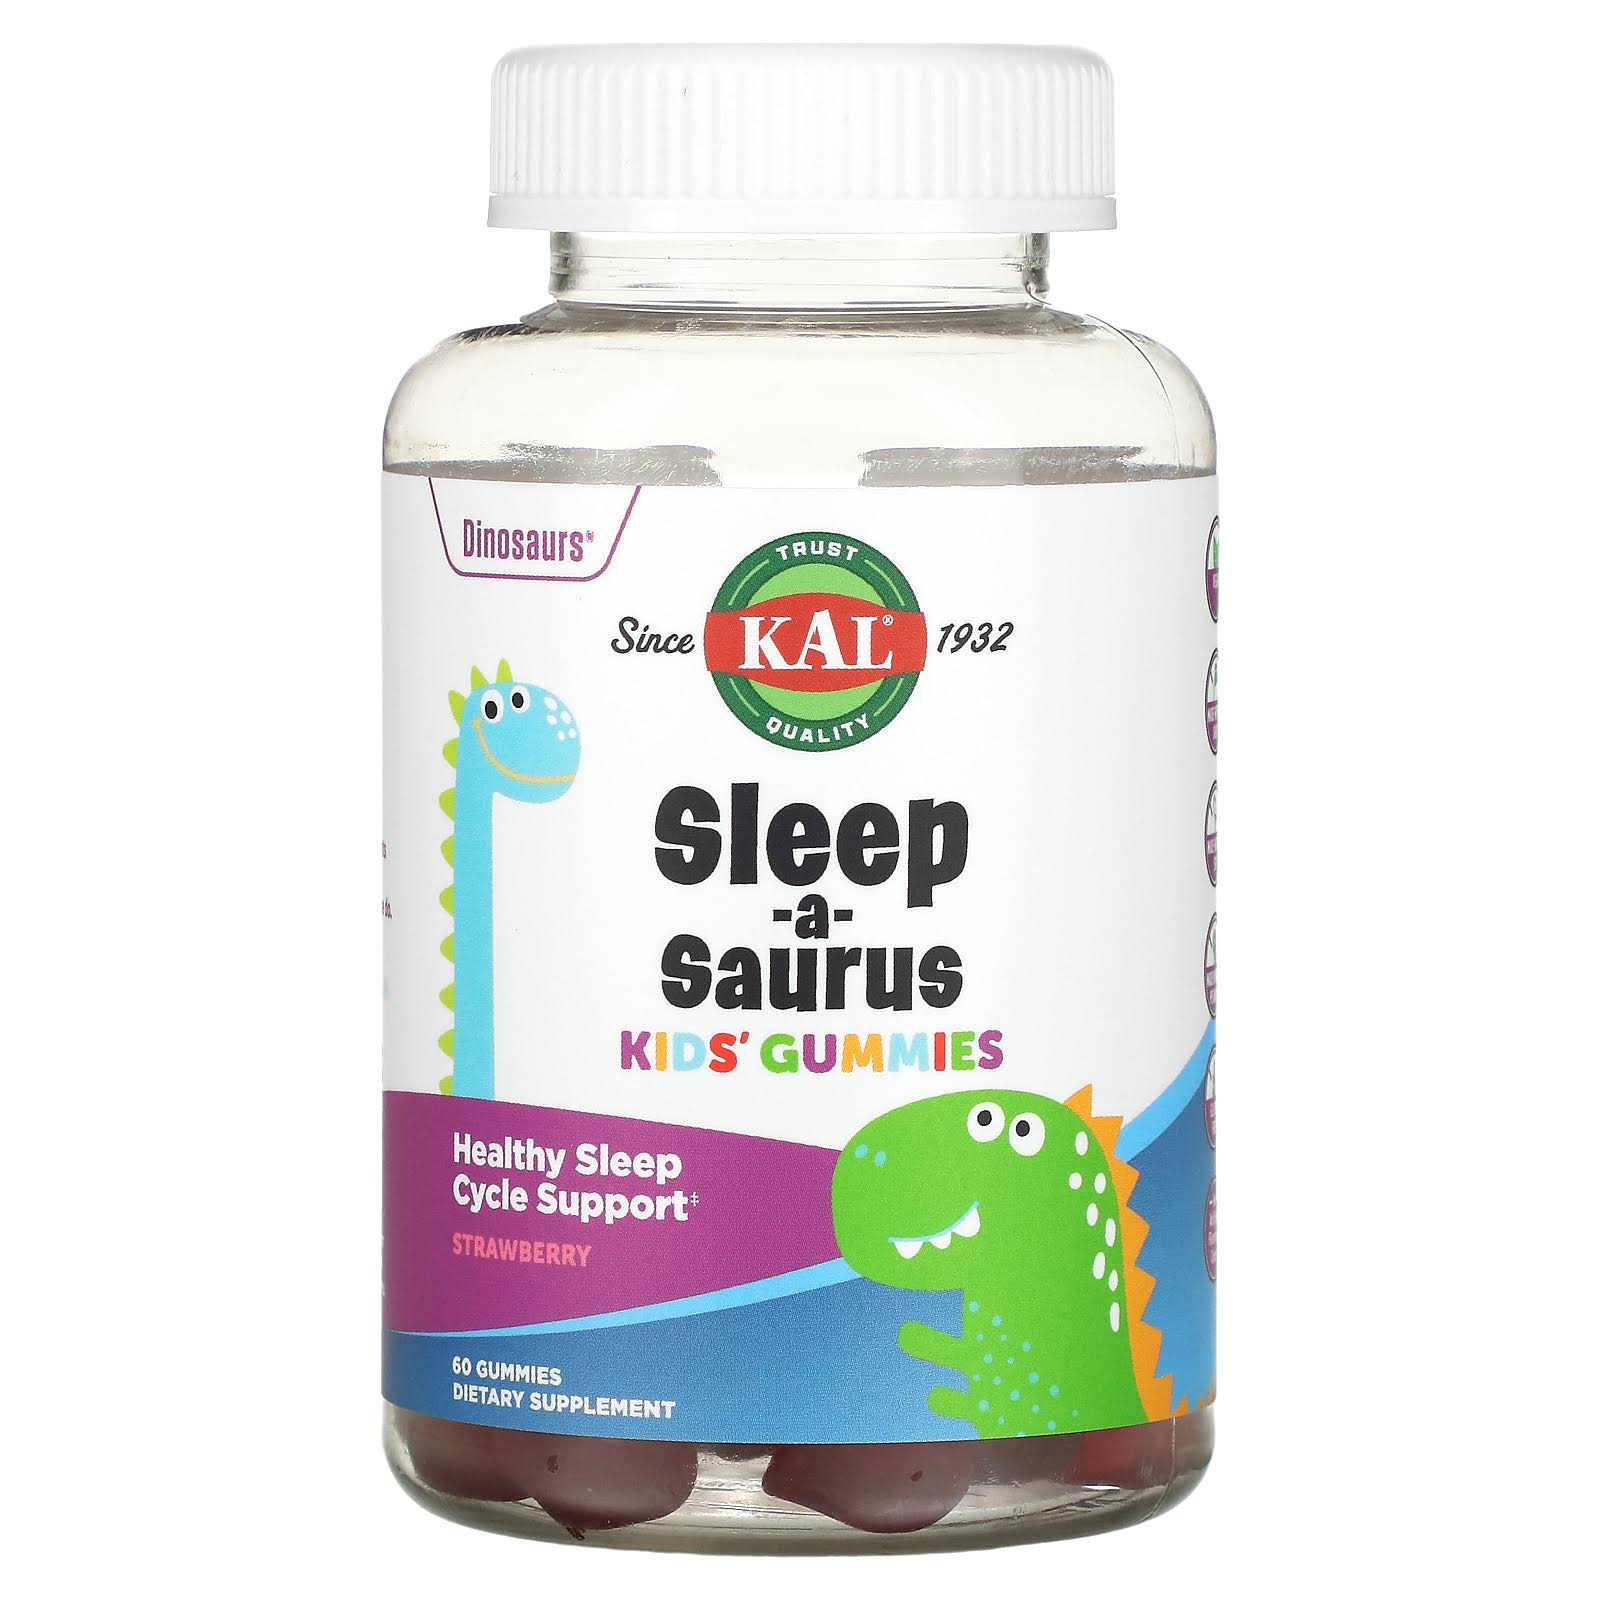 KAL, Dinosaurs, Sleep-a-Saurus Kid's Gummies, Strawberry, 60 Gummies